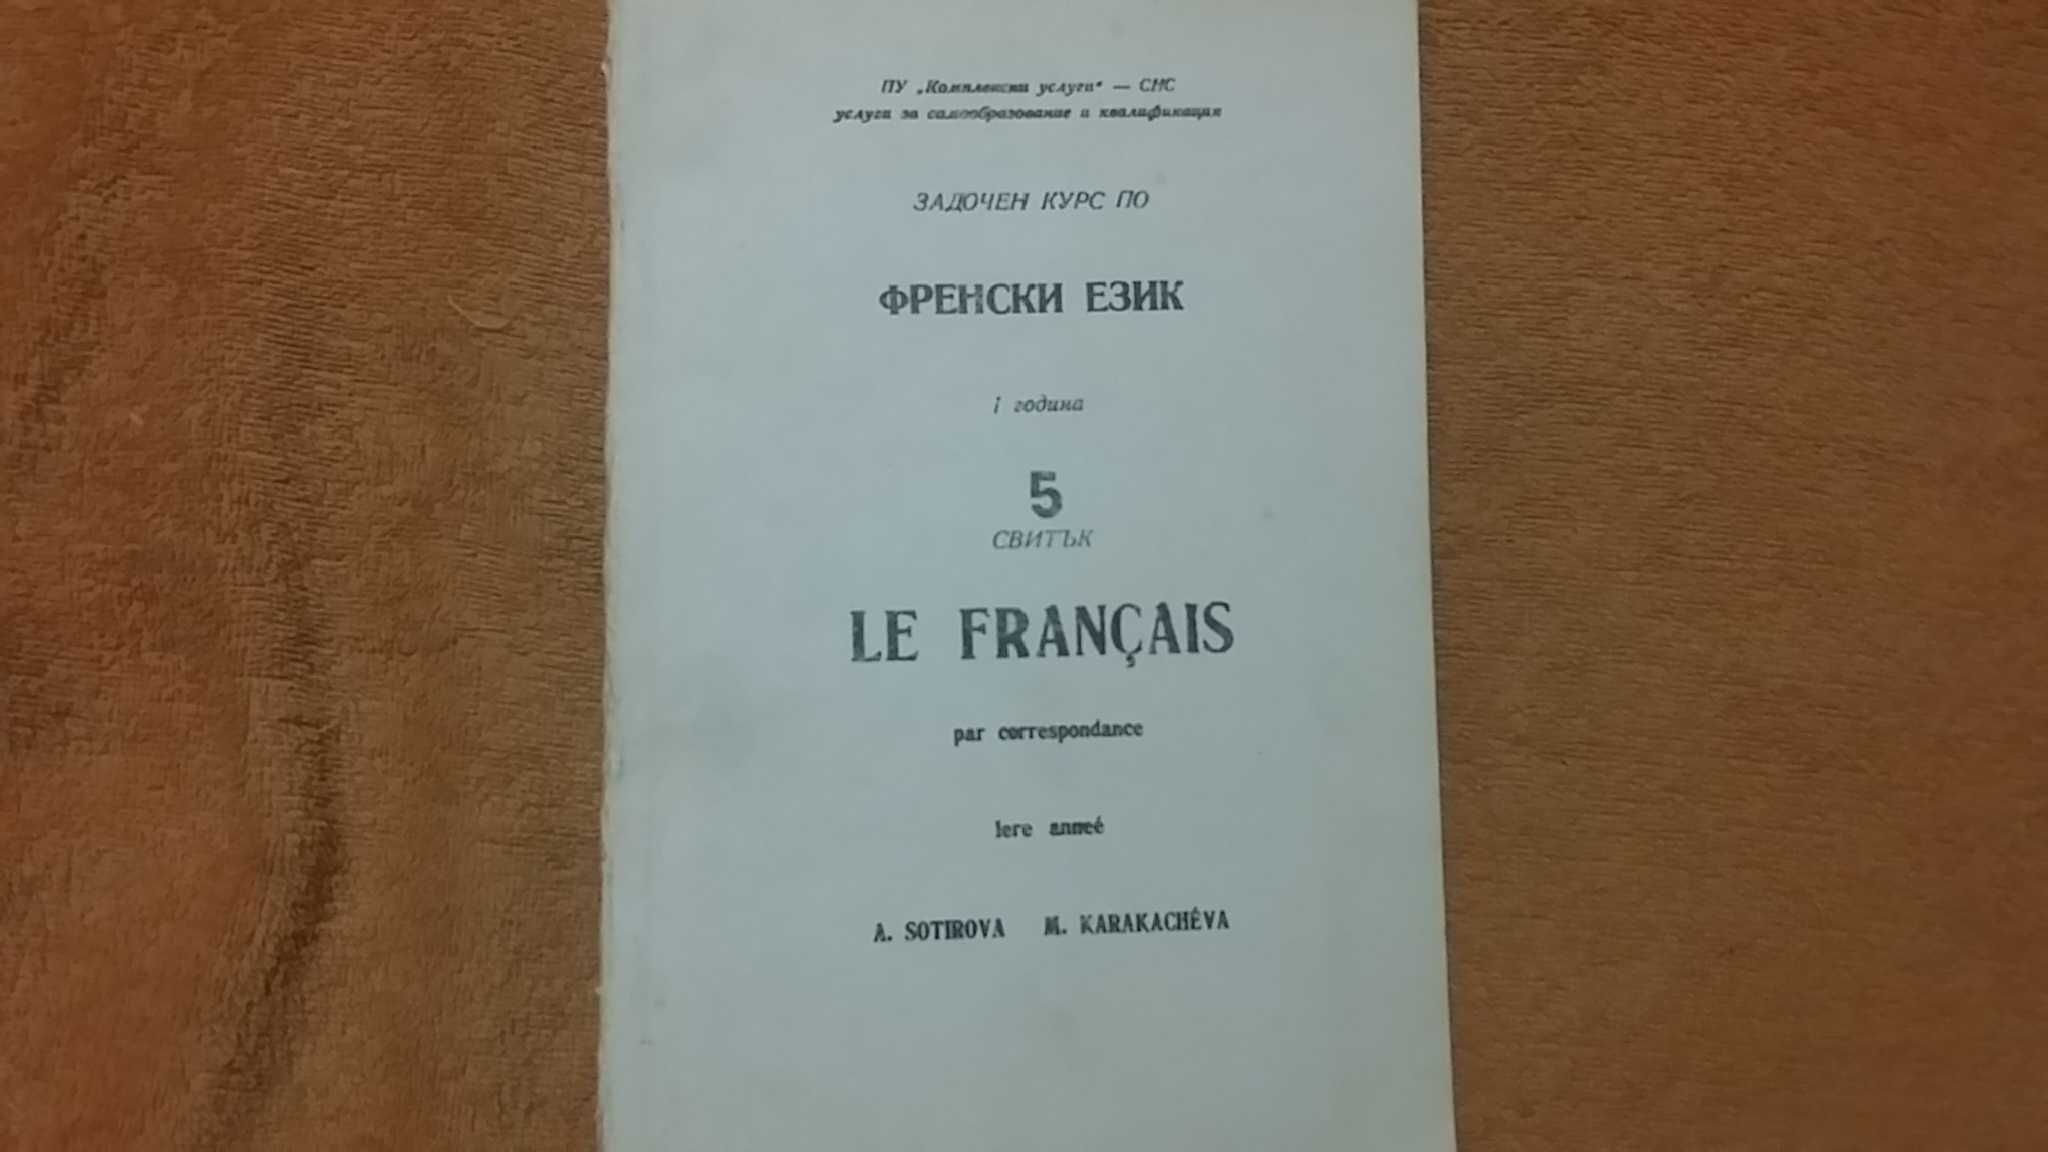 Френски Учебници и Речници